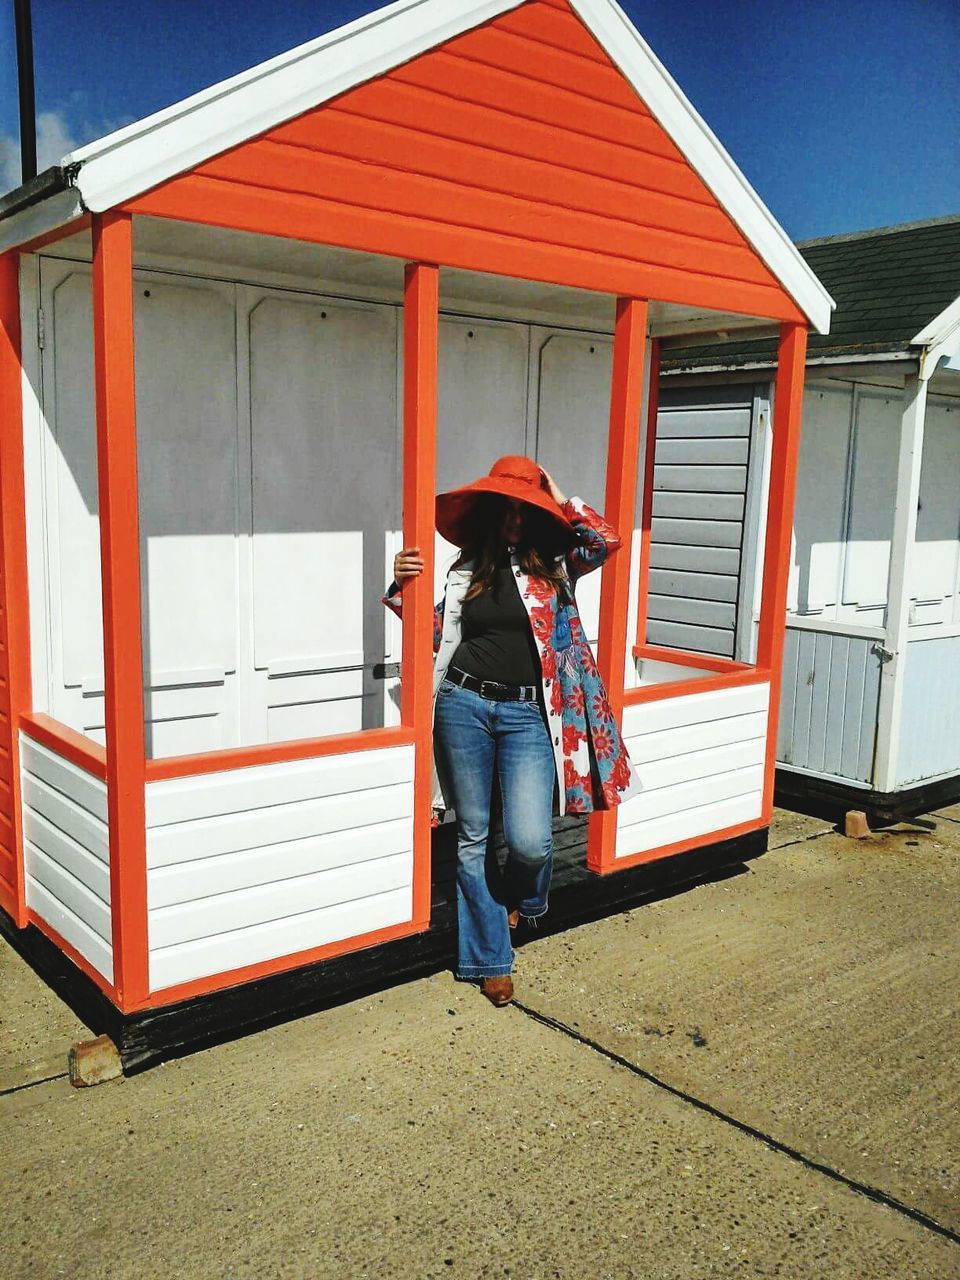 Woman standing by beach hut